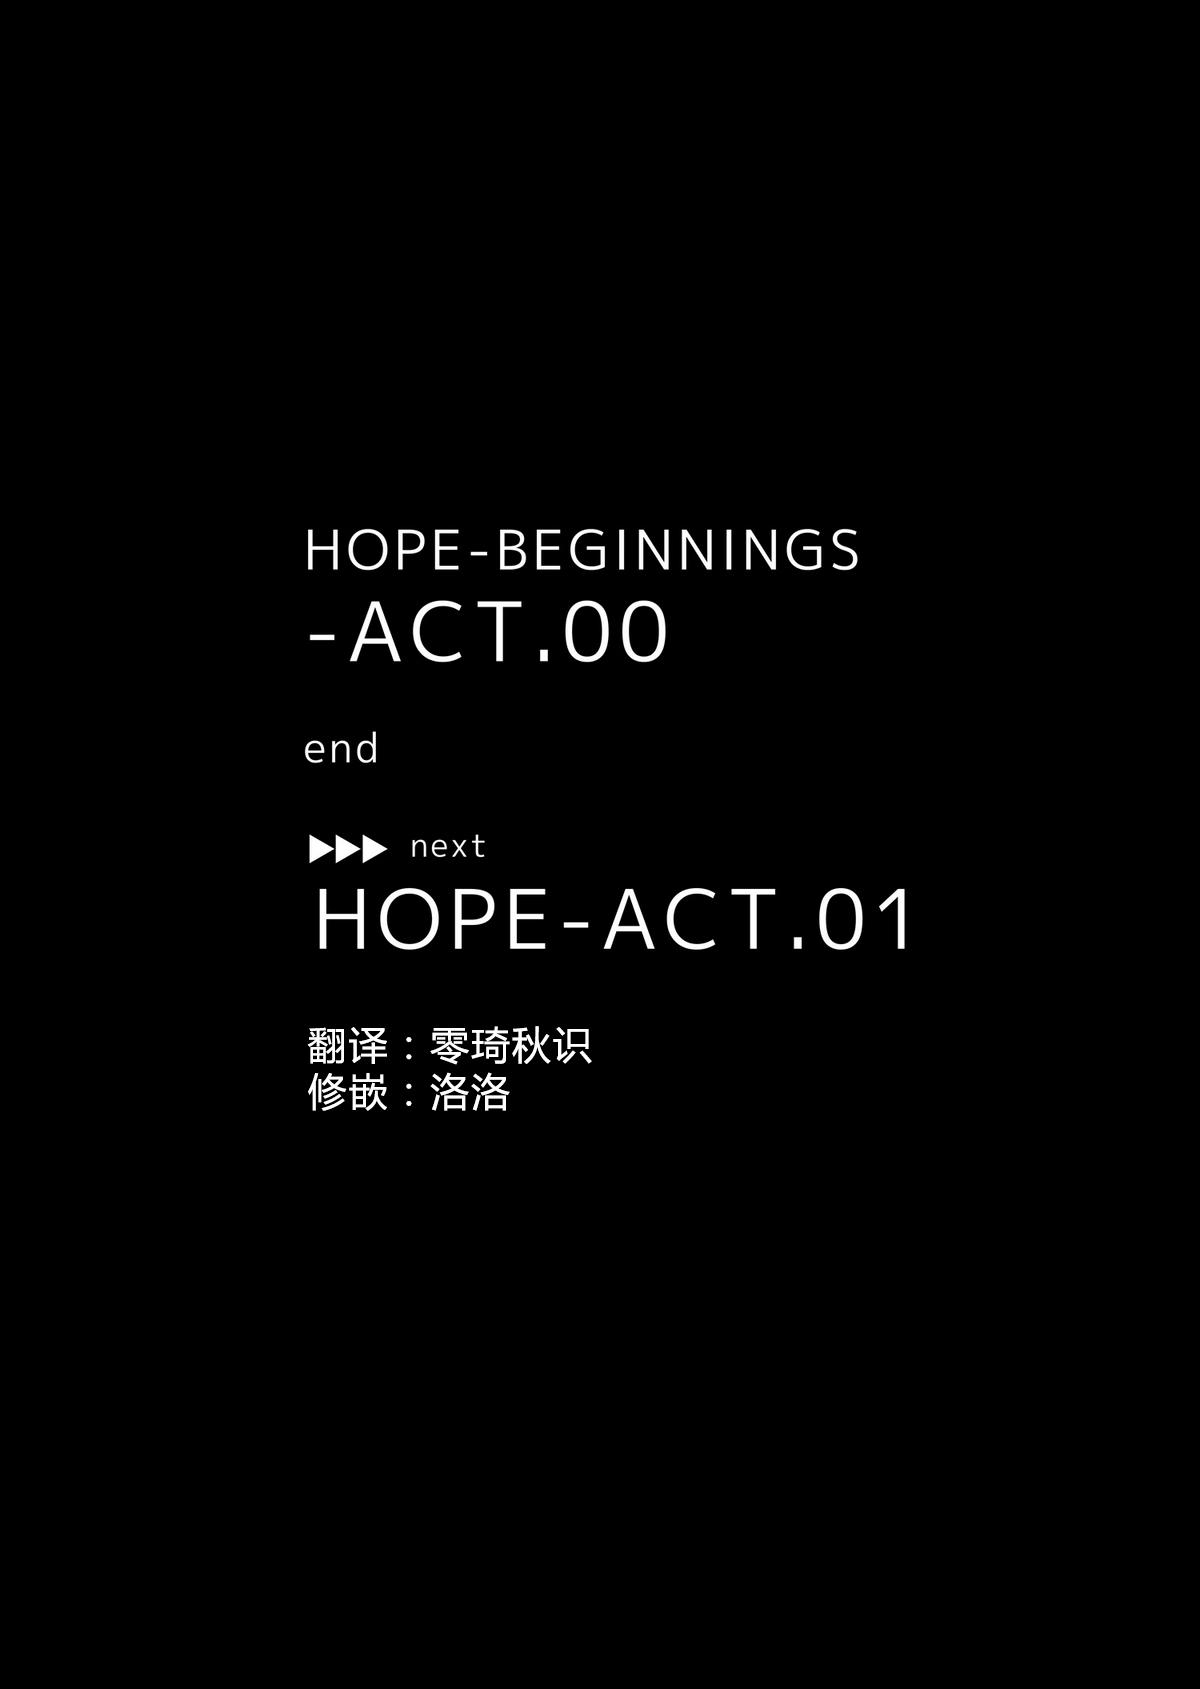 HOPE-ACT.00 21